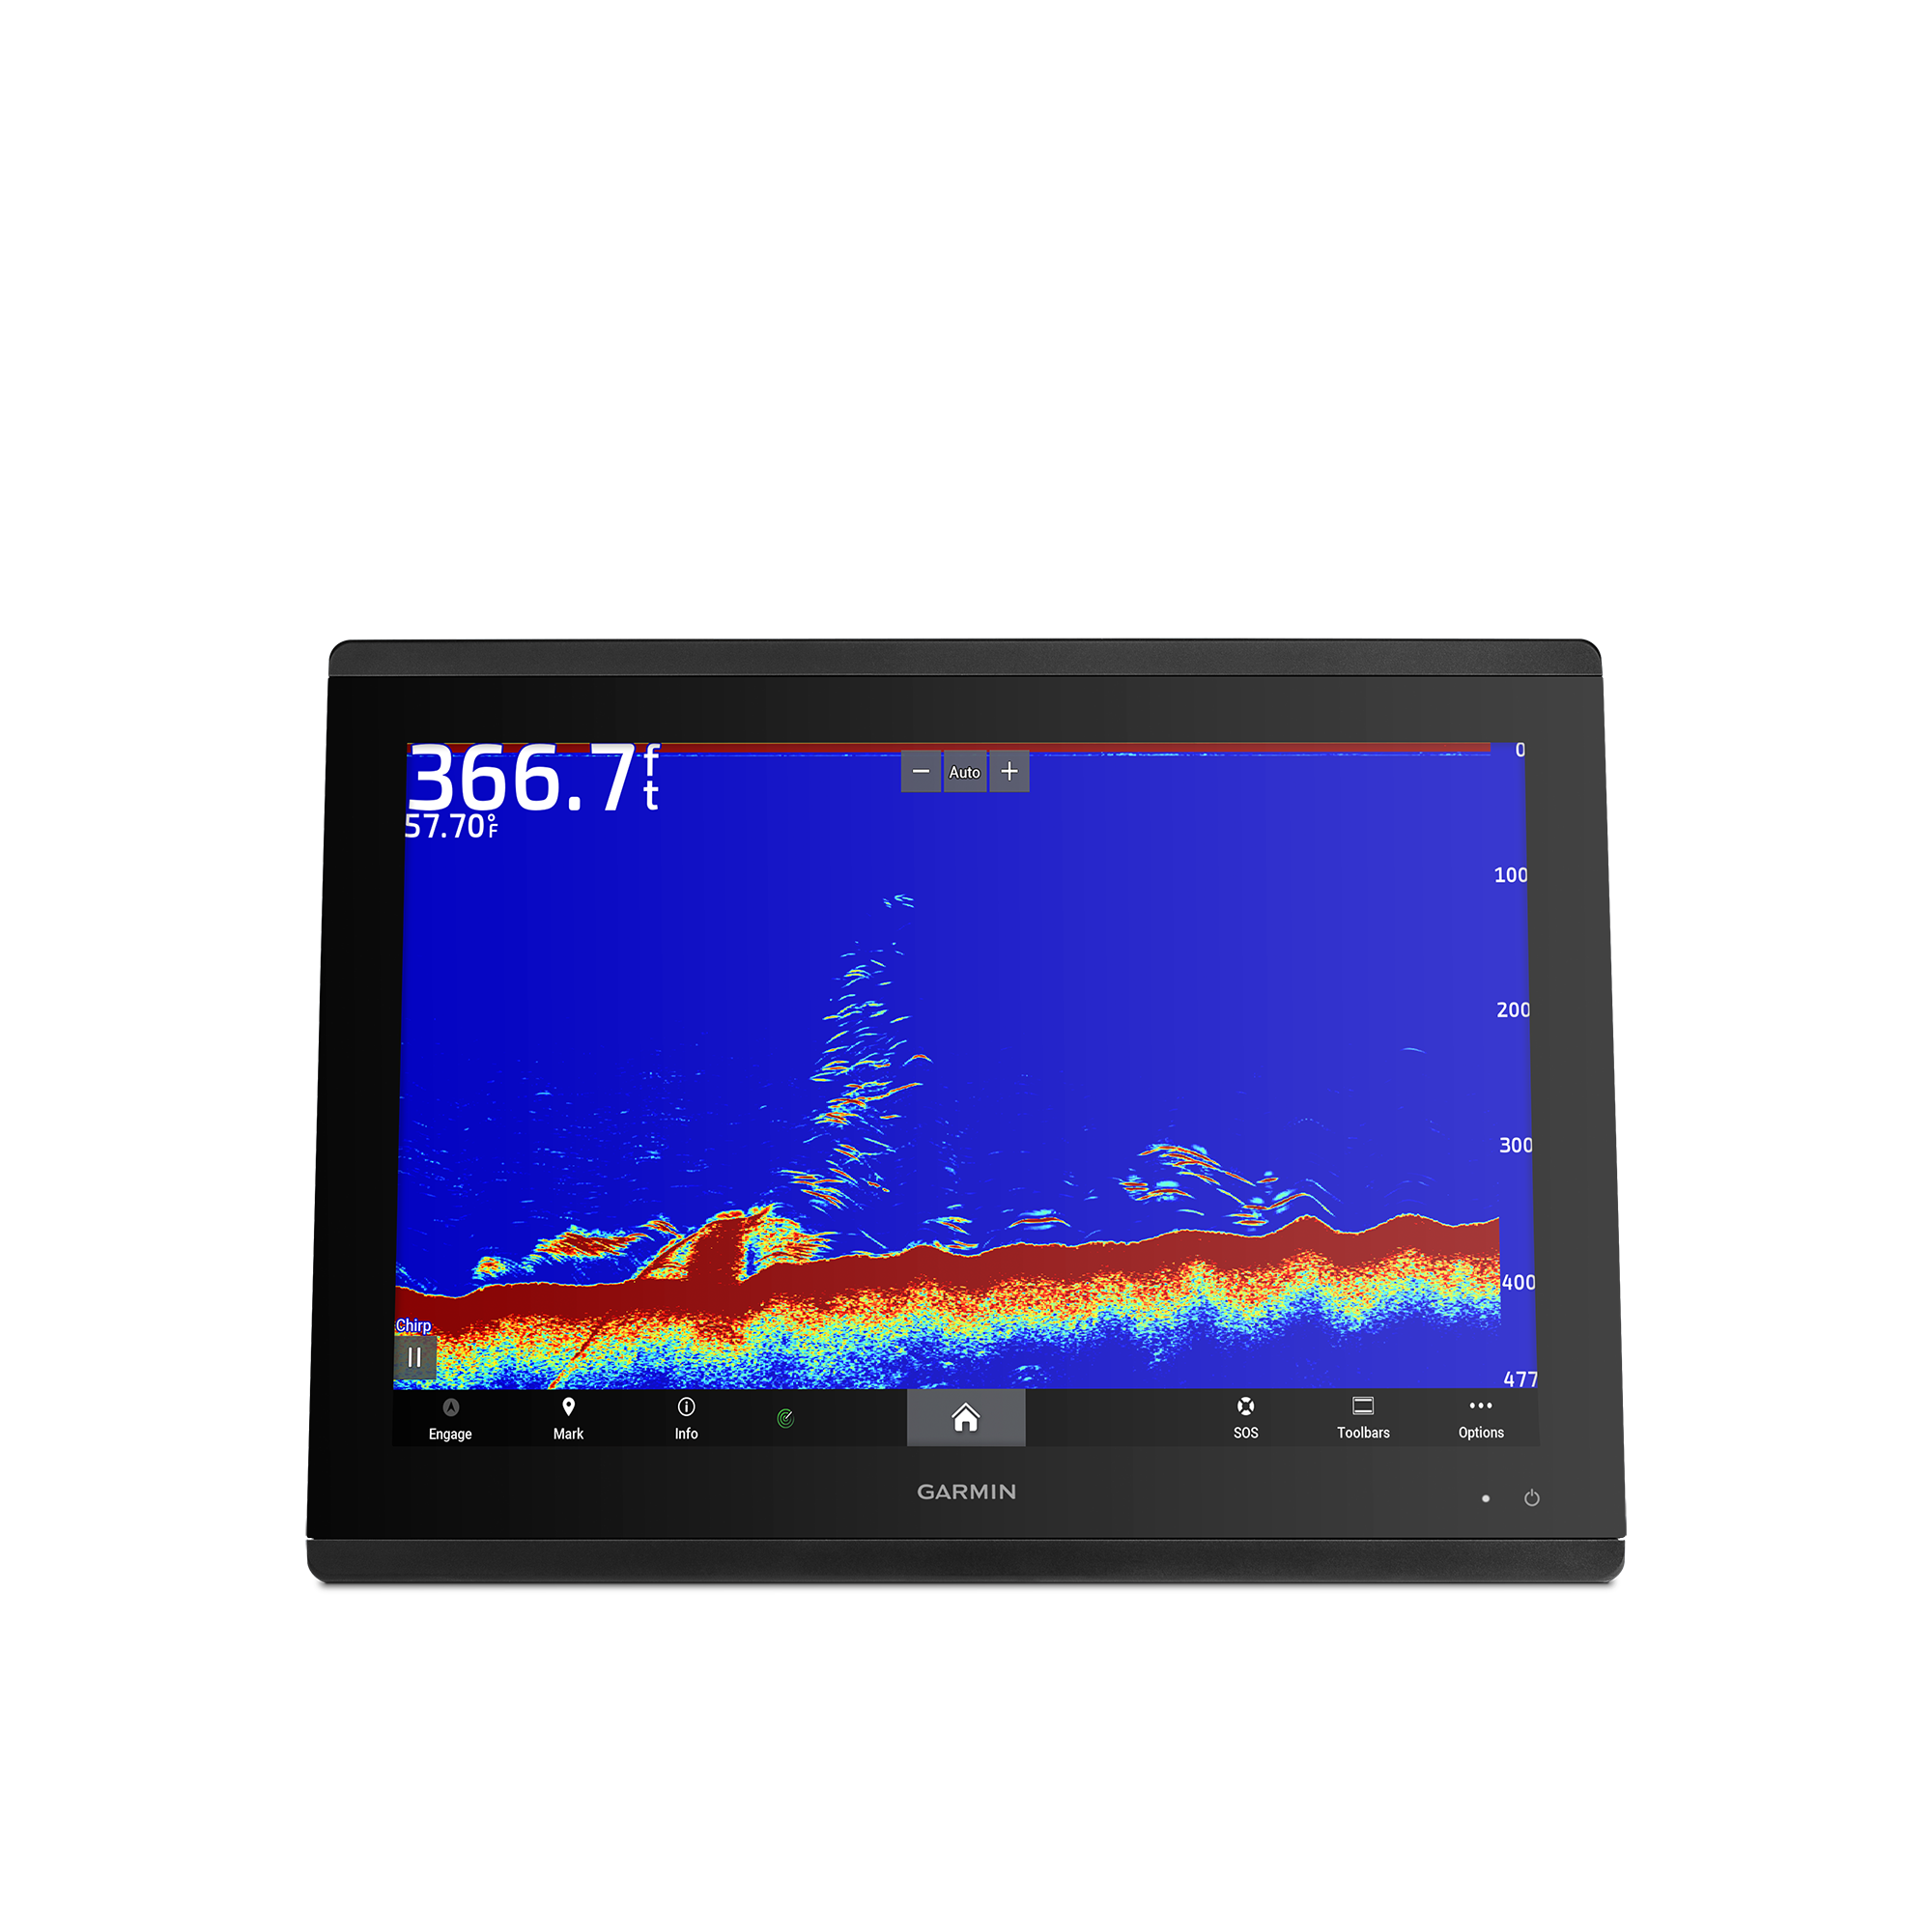 Wiring diagram help - VHF to Garmin MFD - The Hull Truth - Boating